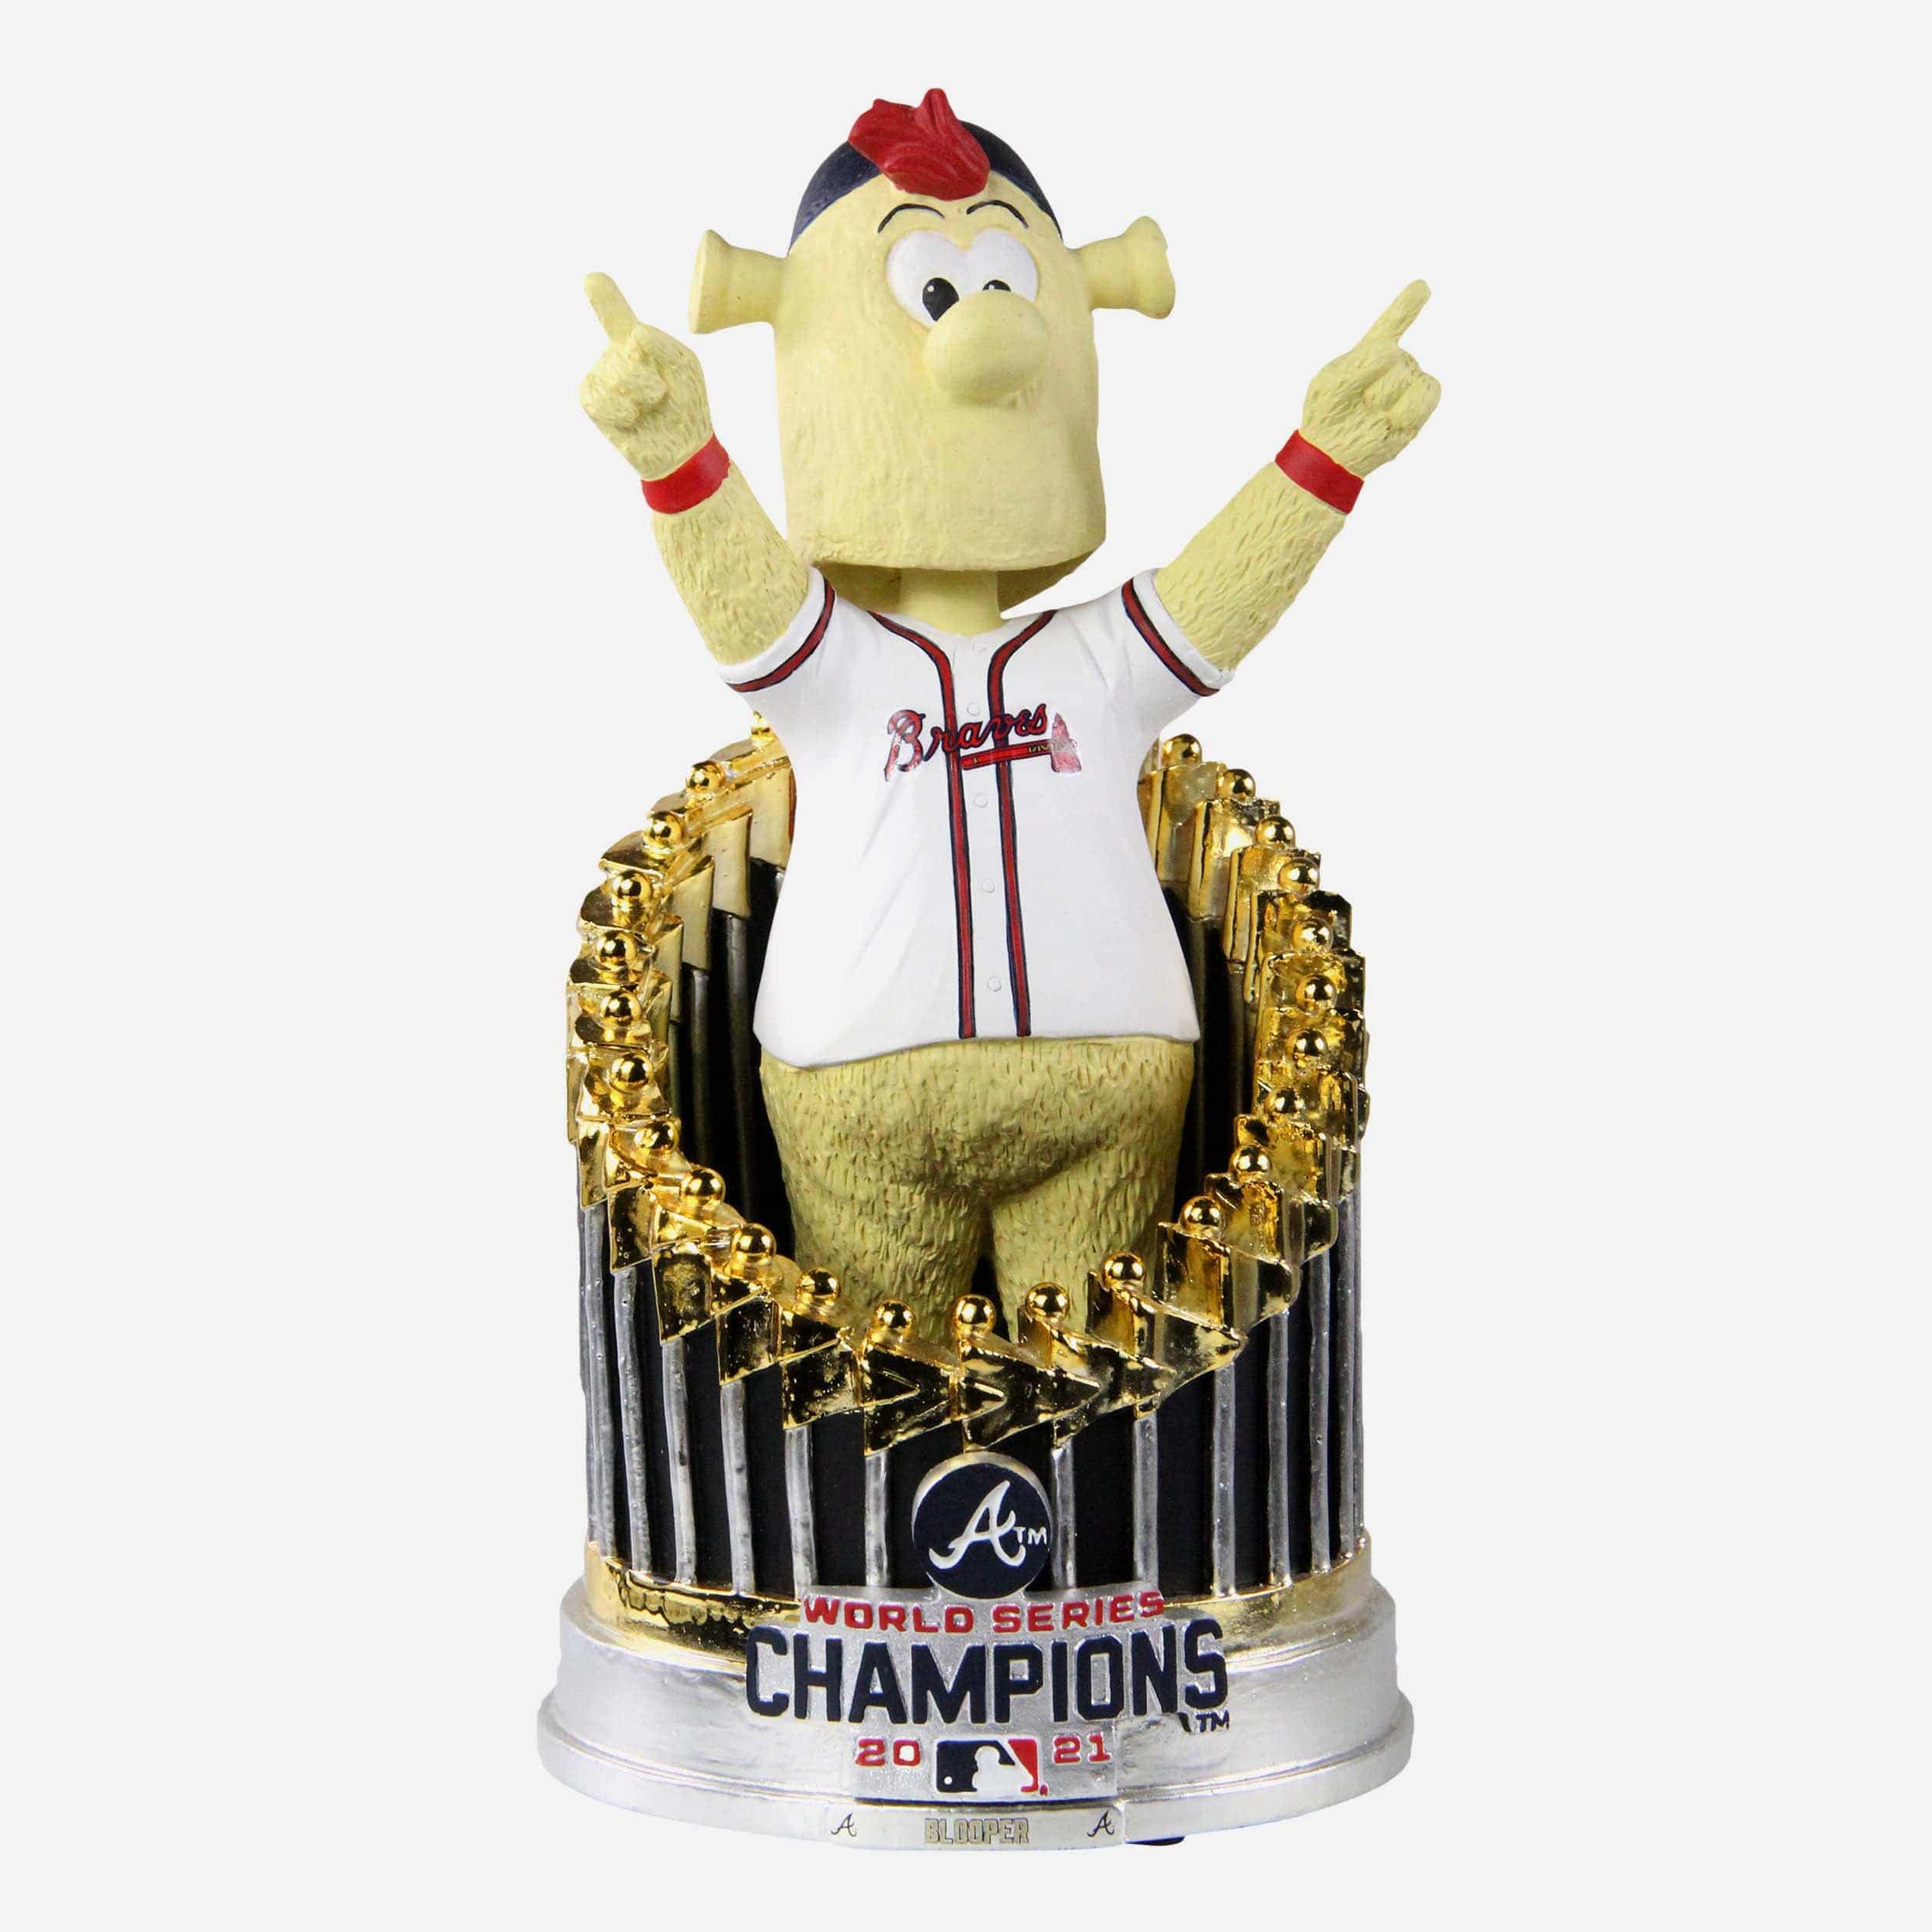 Atlanta Braves 2021 World Series Champions Medium Plush Mascot With Pennant